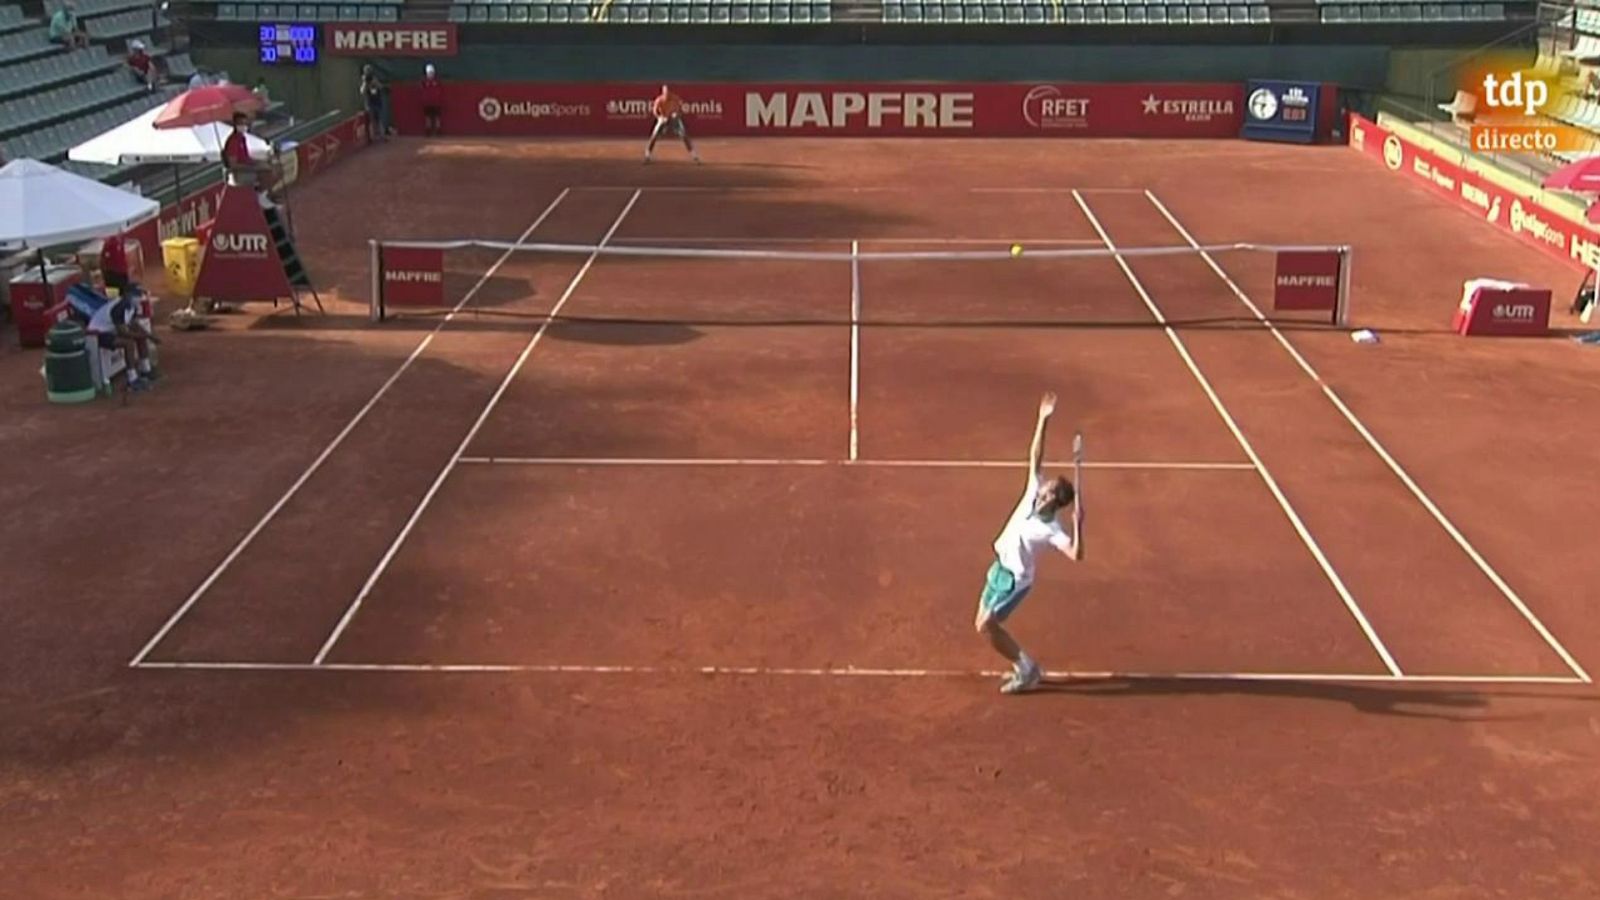 Tenis - Liga Mapfre de tenis masculino. 1ª Jornada, 2º partido. Desde Barcelona - RTVE.es